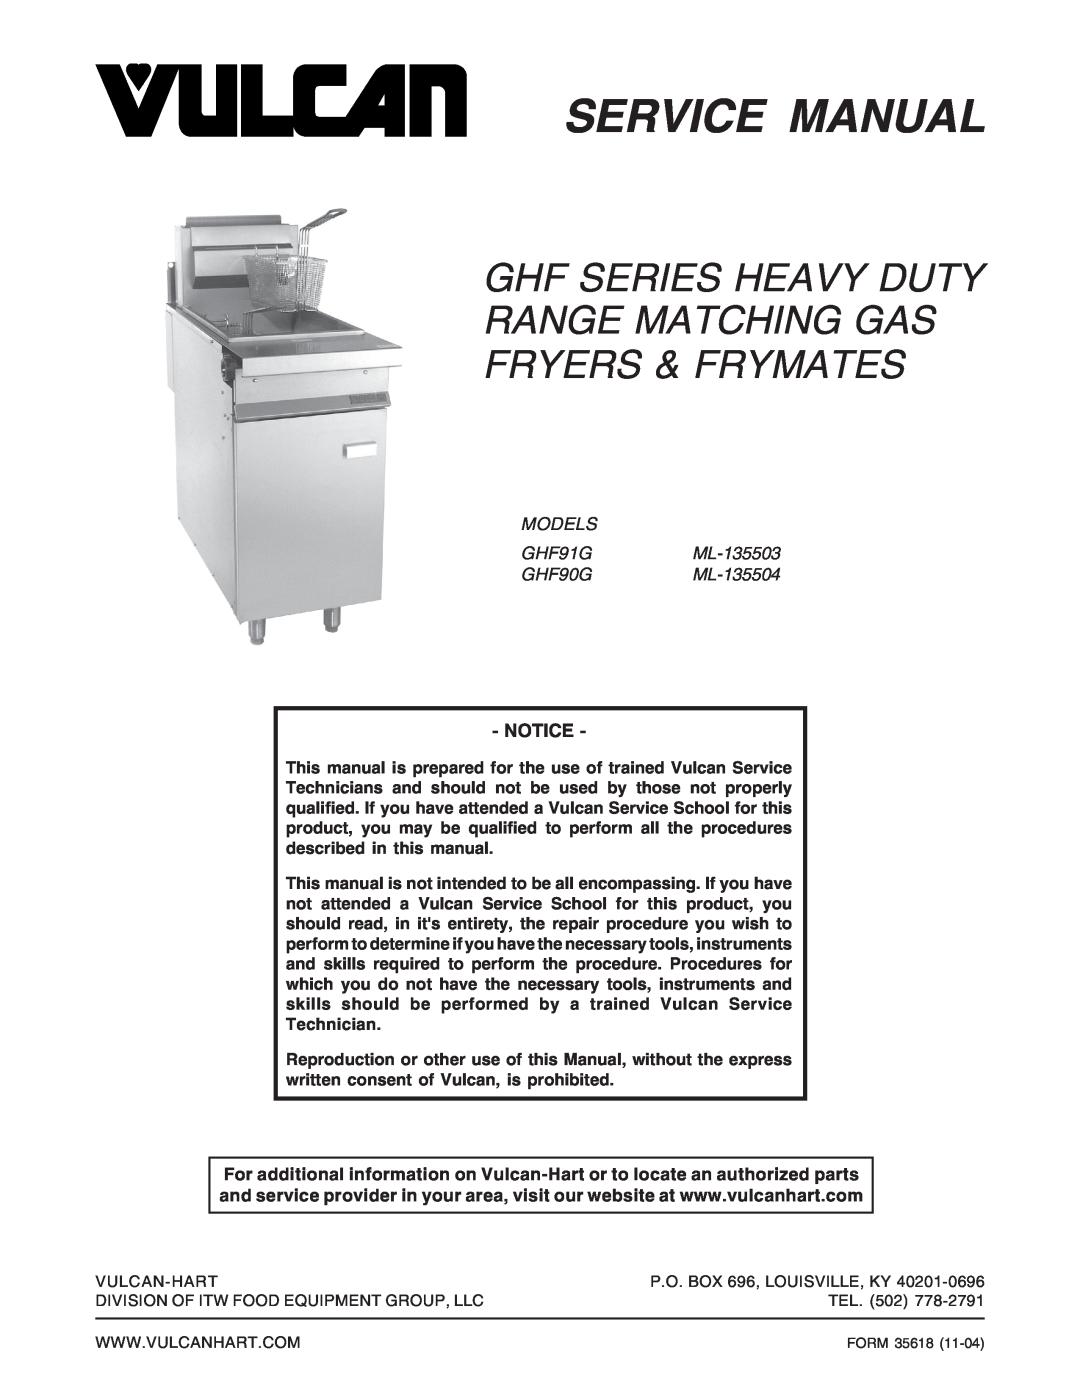 Vulcan-Hart GHF90G ML-135504, GHF91G ML-135503 service manual Ghf Series Heavy Duty Range Matching Gas, Fryers & Frymates 